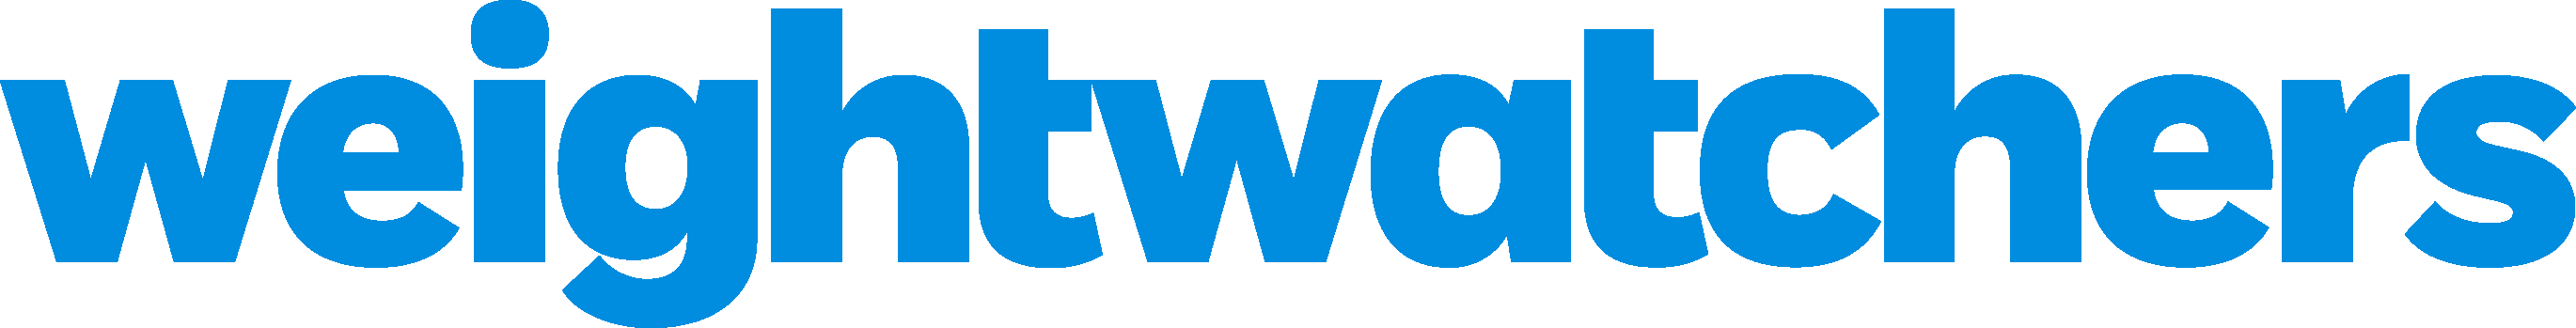 Weight Watchers Logo png